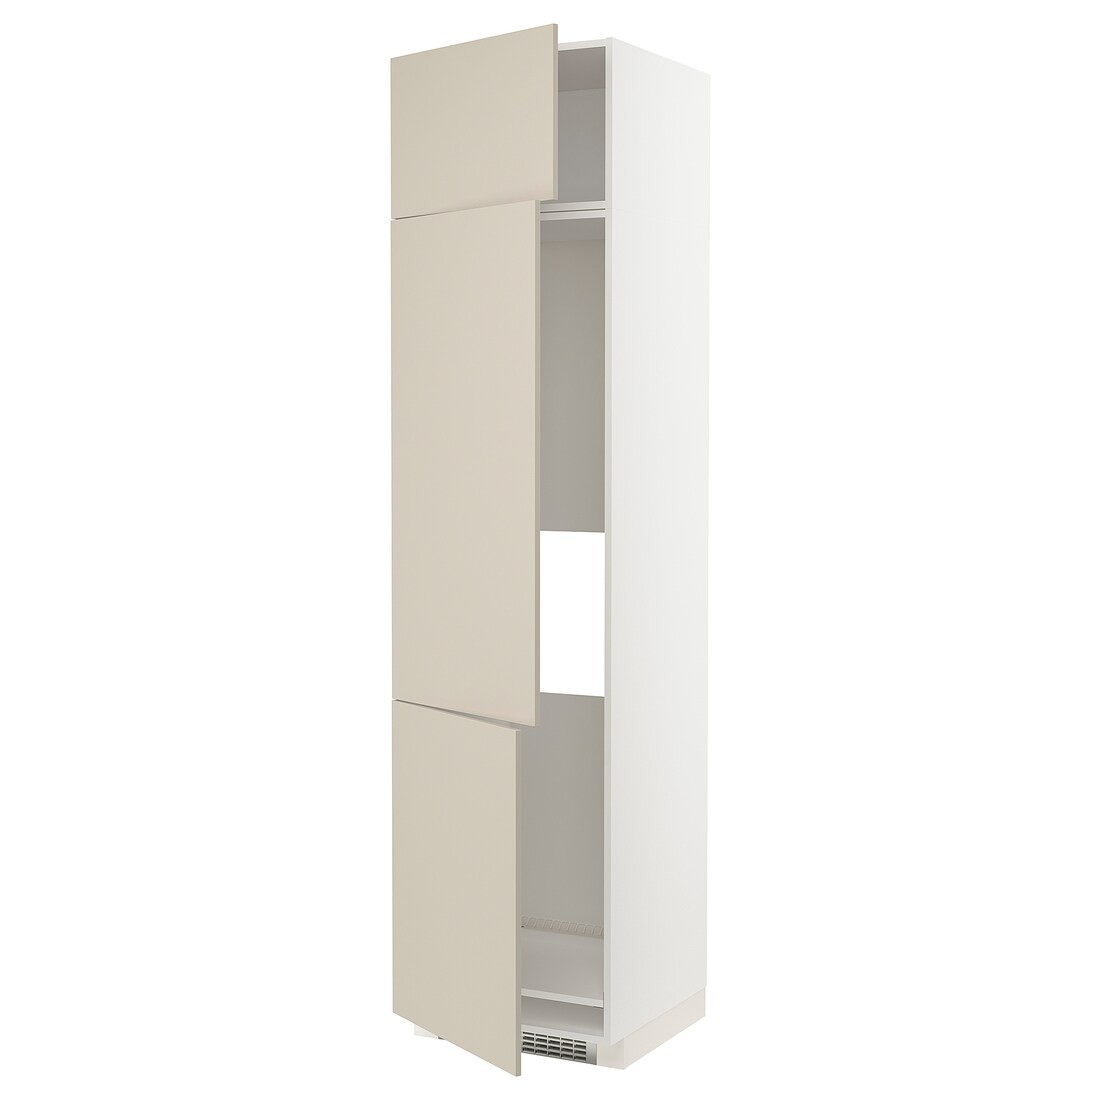 IKEA METOD МЕТОД Высокий шкаф для холодильника / морозильника / 3 дверцы, белый / Havstorp бежевый, 60x60x240 см 29469054 294.690.54